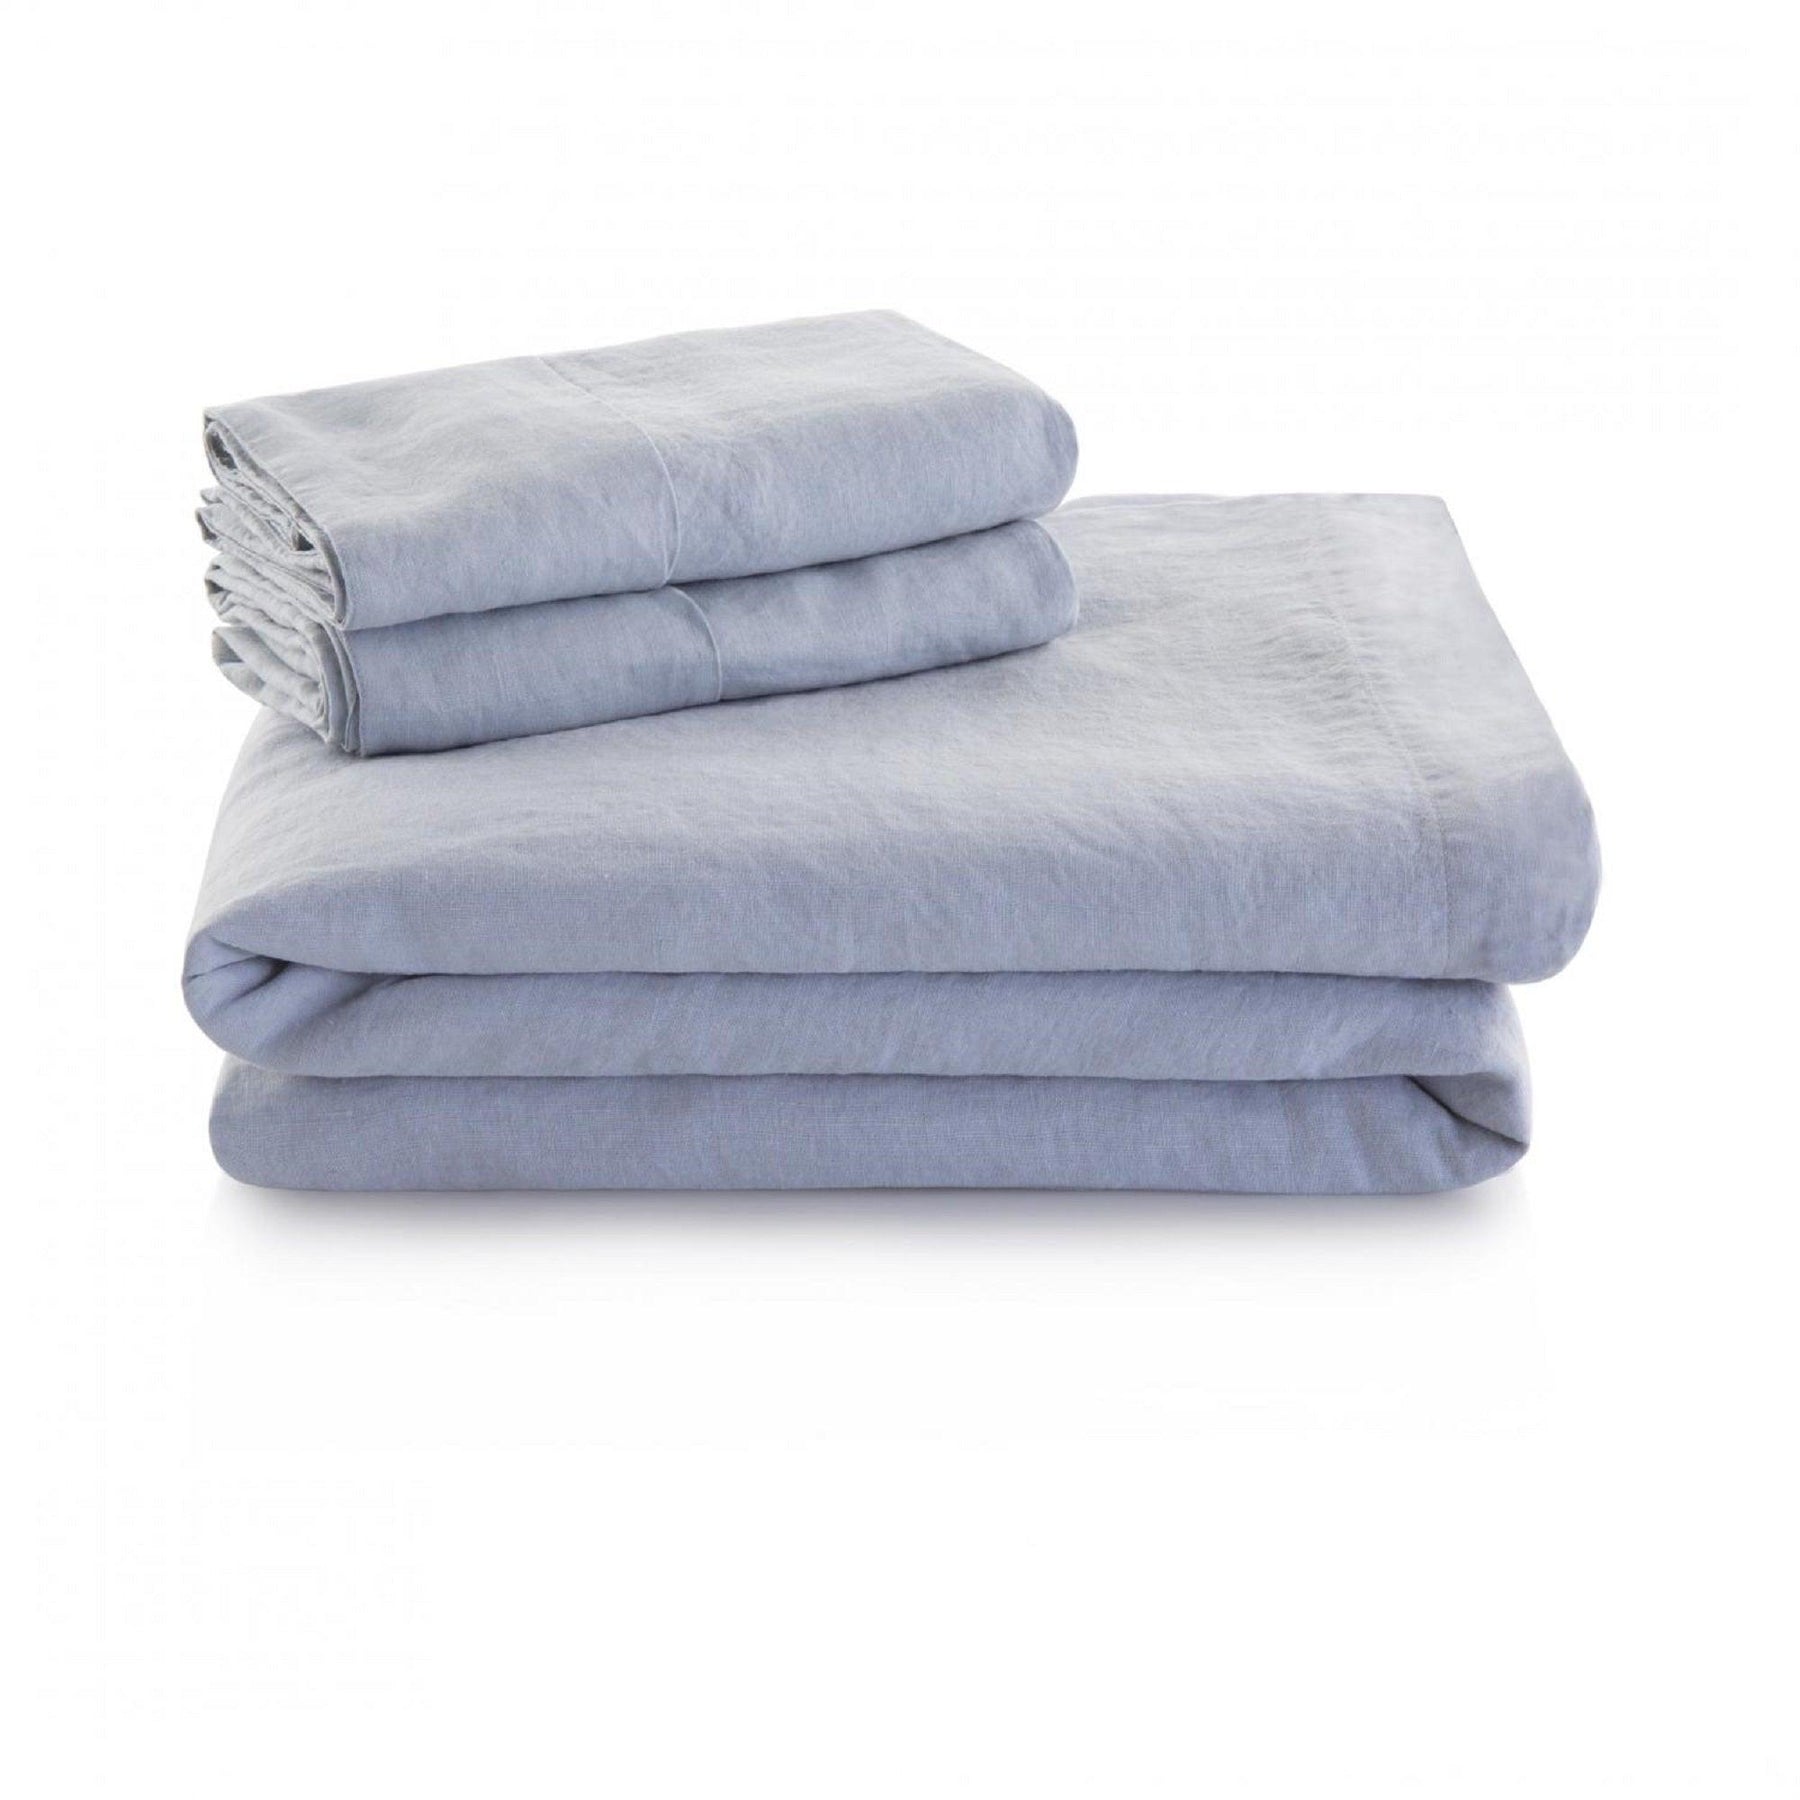 Woven French Linen Sheet Set - beddingbag.com